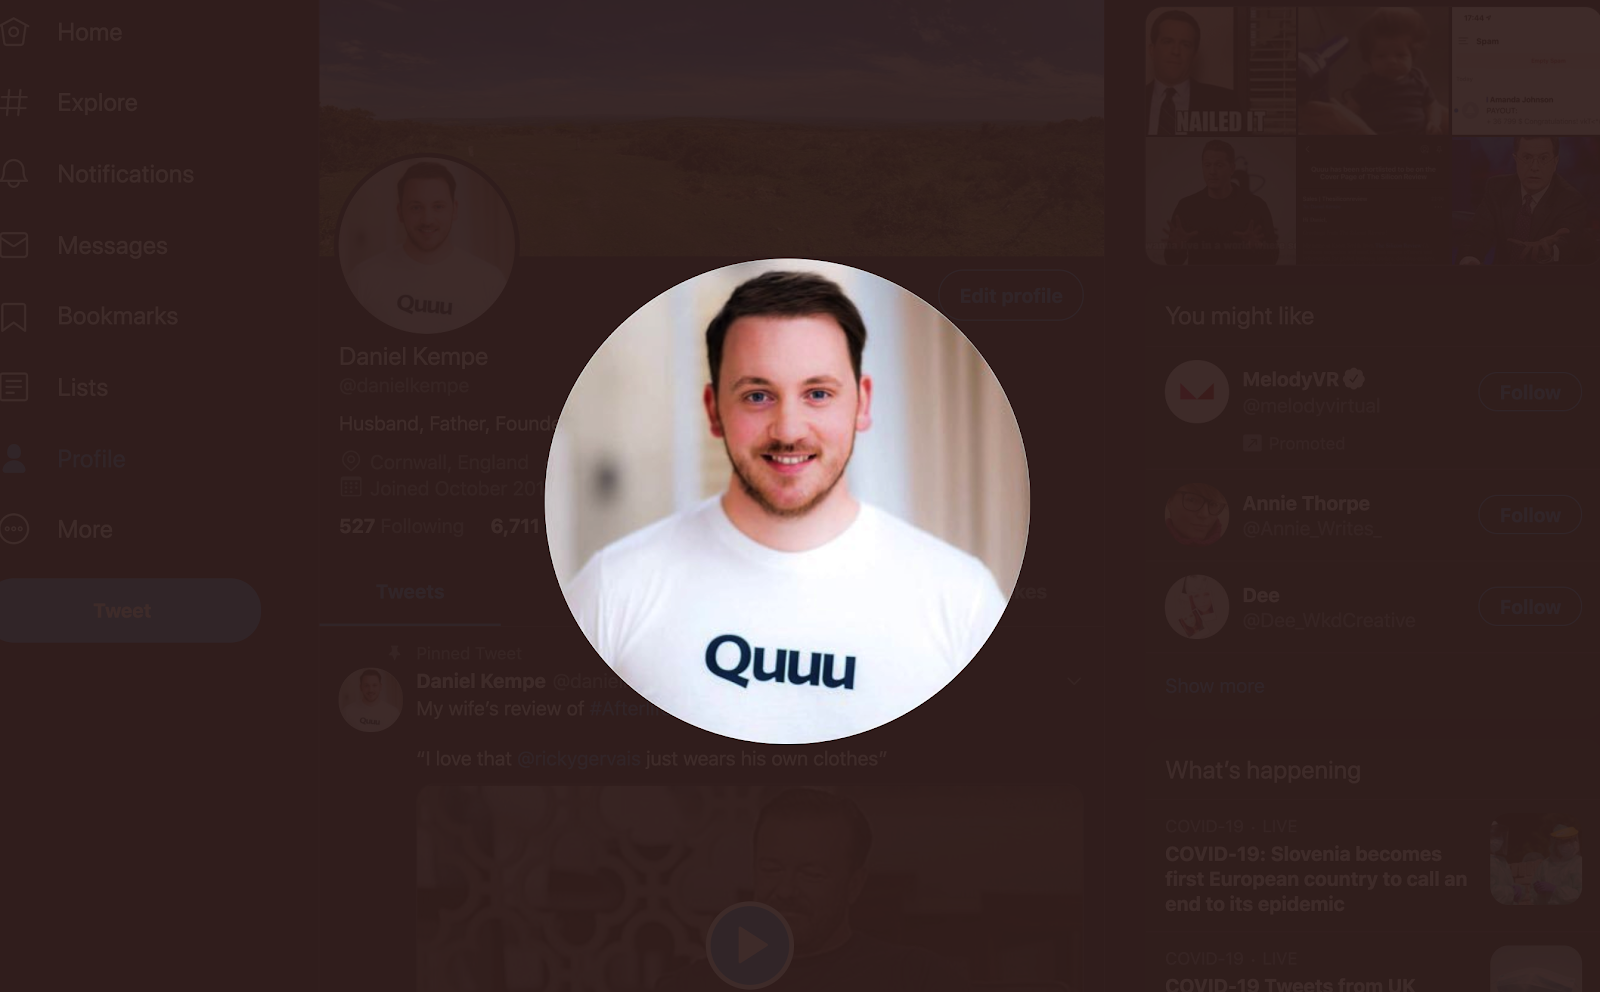 Daniel Kempe CEO of Quuu's Twitter profile image.